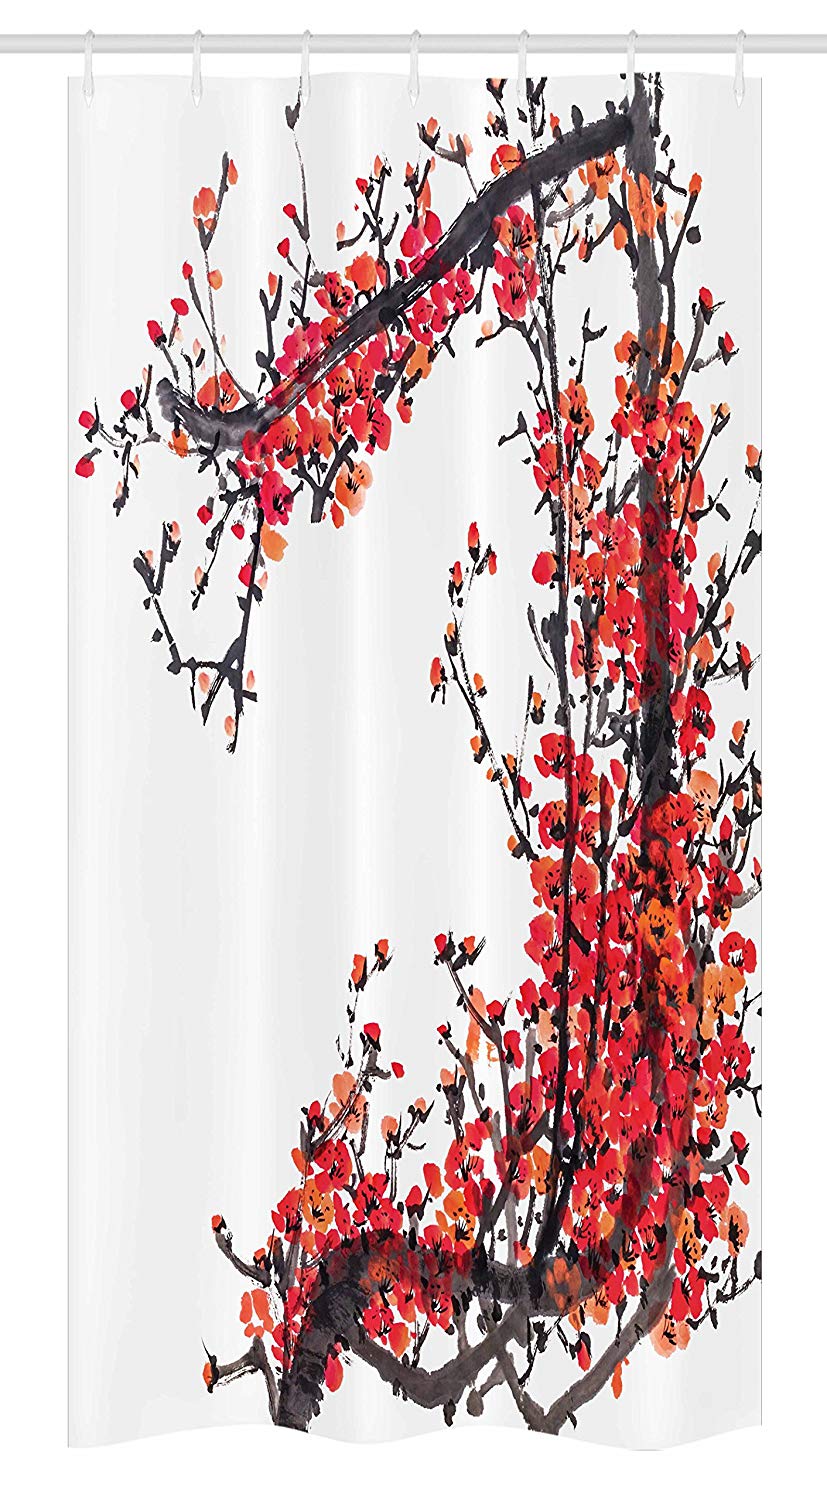 Ambesonne Japanese Stall Shower Curtain, Japanese Cherry Blossom Sakura Branch with Brushstrokes Image Print, Fabric Bathroom Decor Set with Hooks, 36